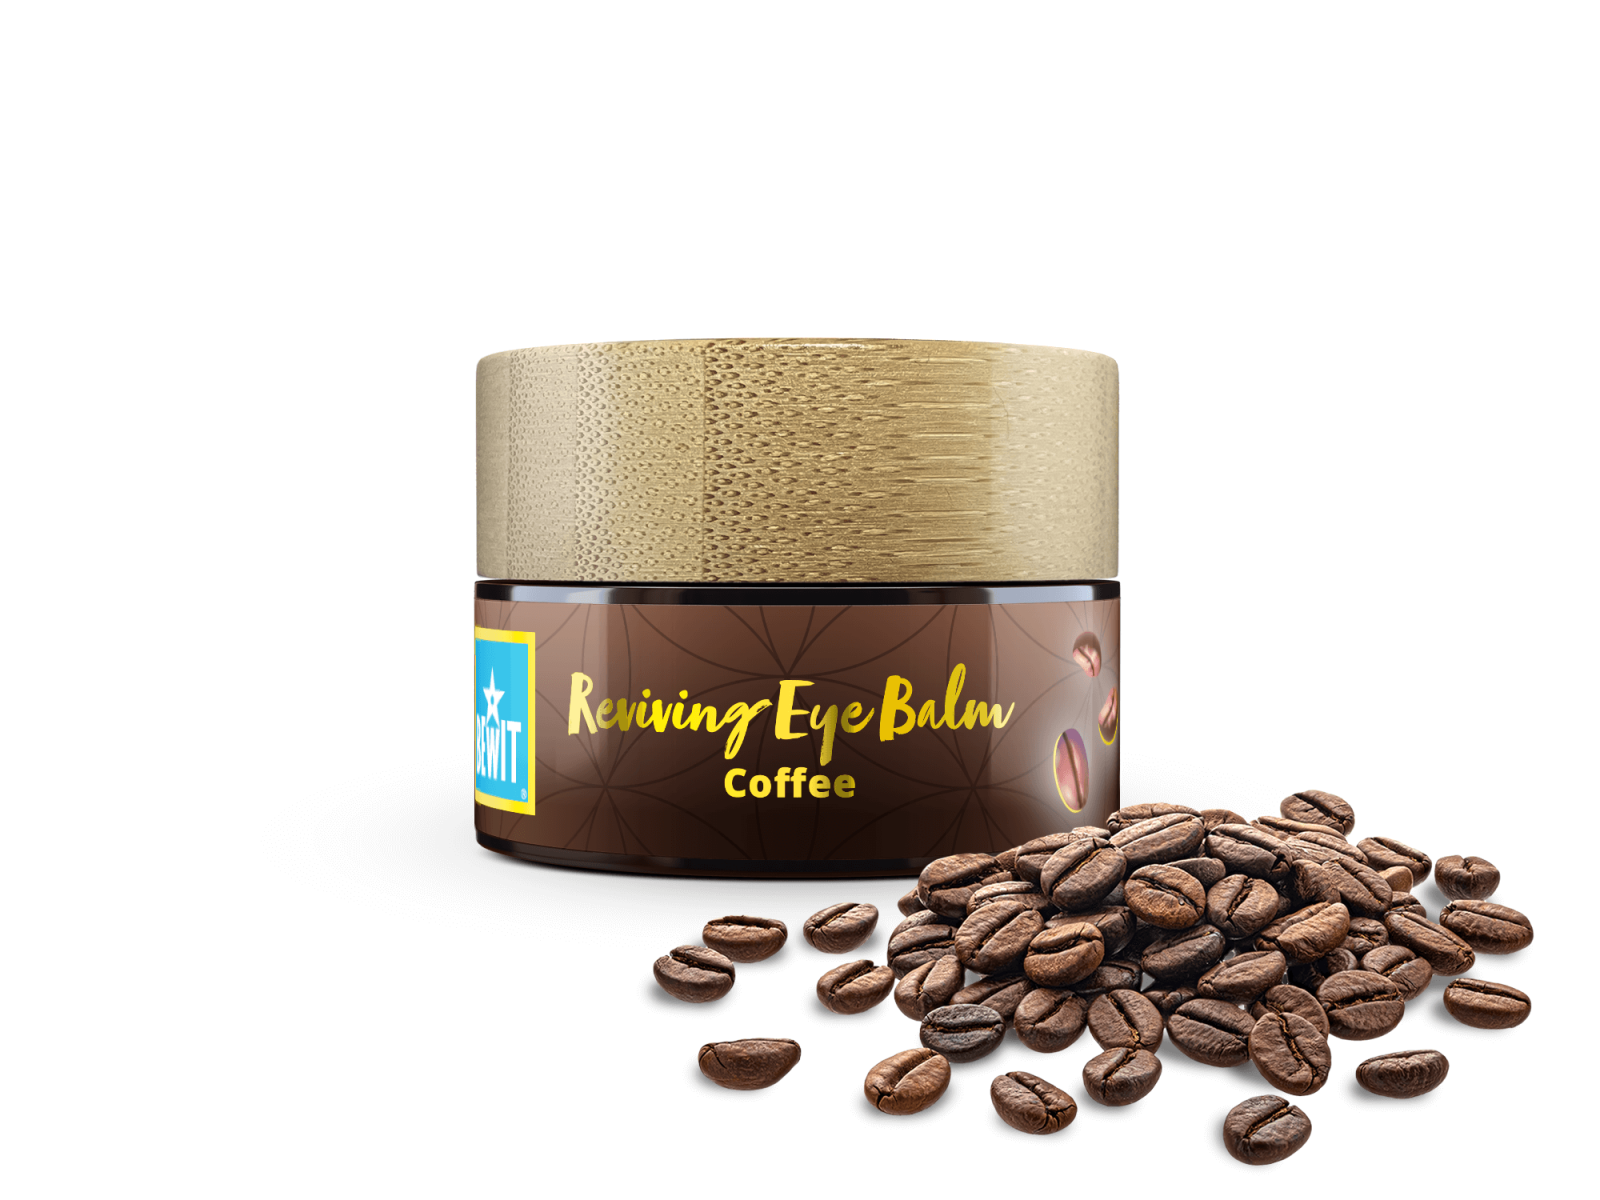 REVIVING COFFEE EYE BALM - Smoothing coffee eye balm - 1